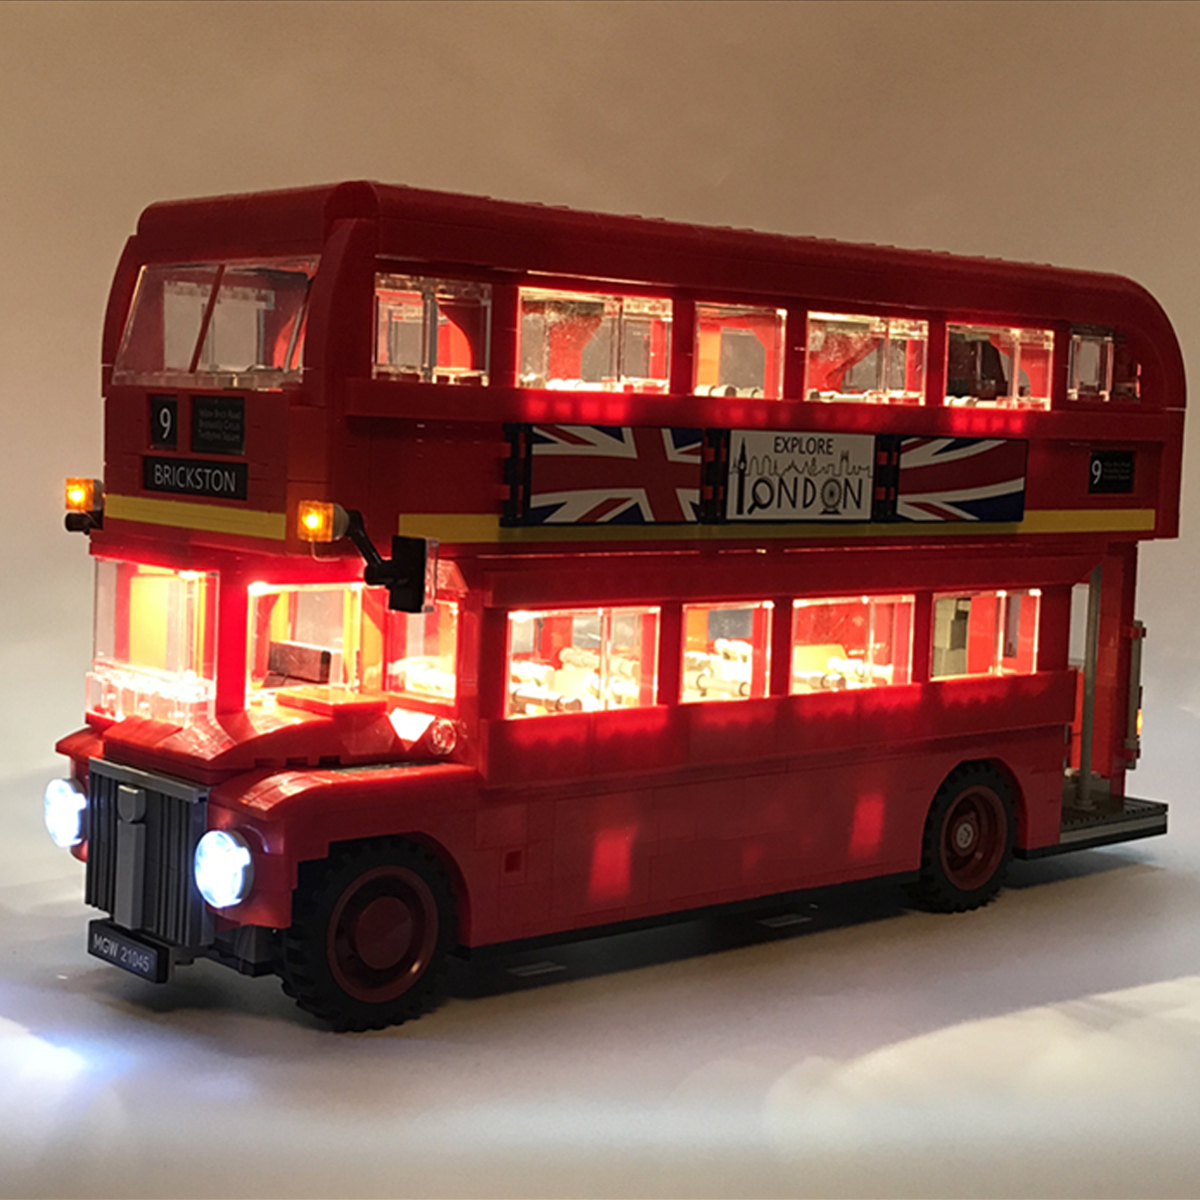 Universal-DIY-LED-Light-Brick-Kit-For-Lego-MOC-Toys-USB-Port-Blocks-Accessories-Decor-1444426-5